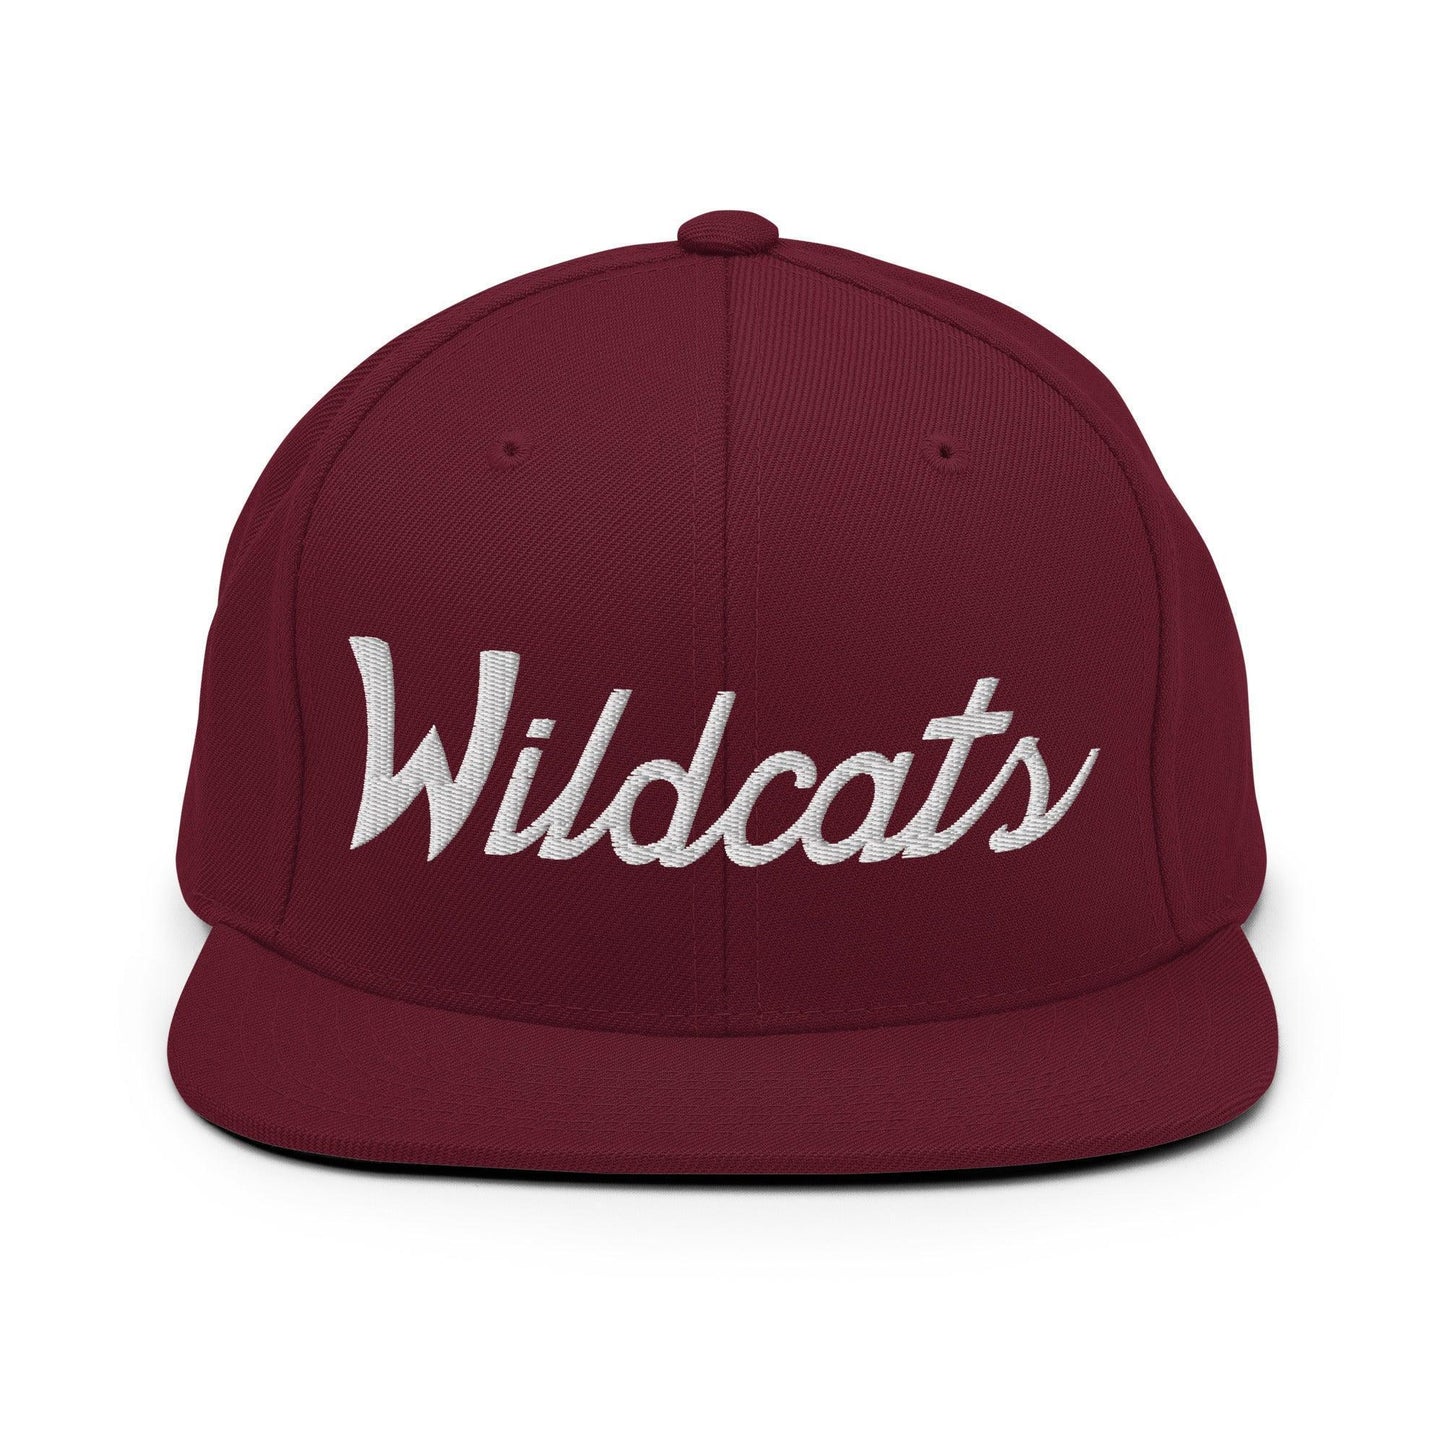 Wildcats School Mascot Script Snapback Hat Maroon